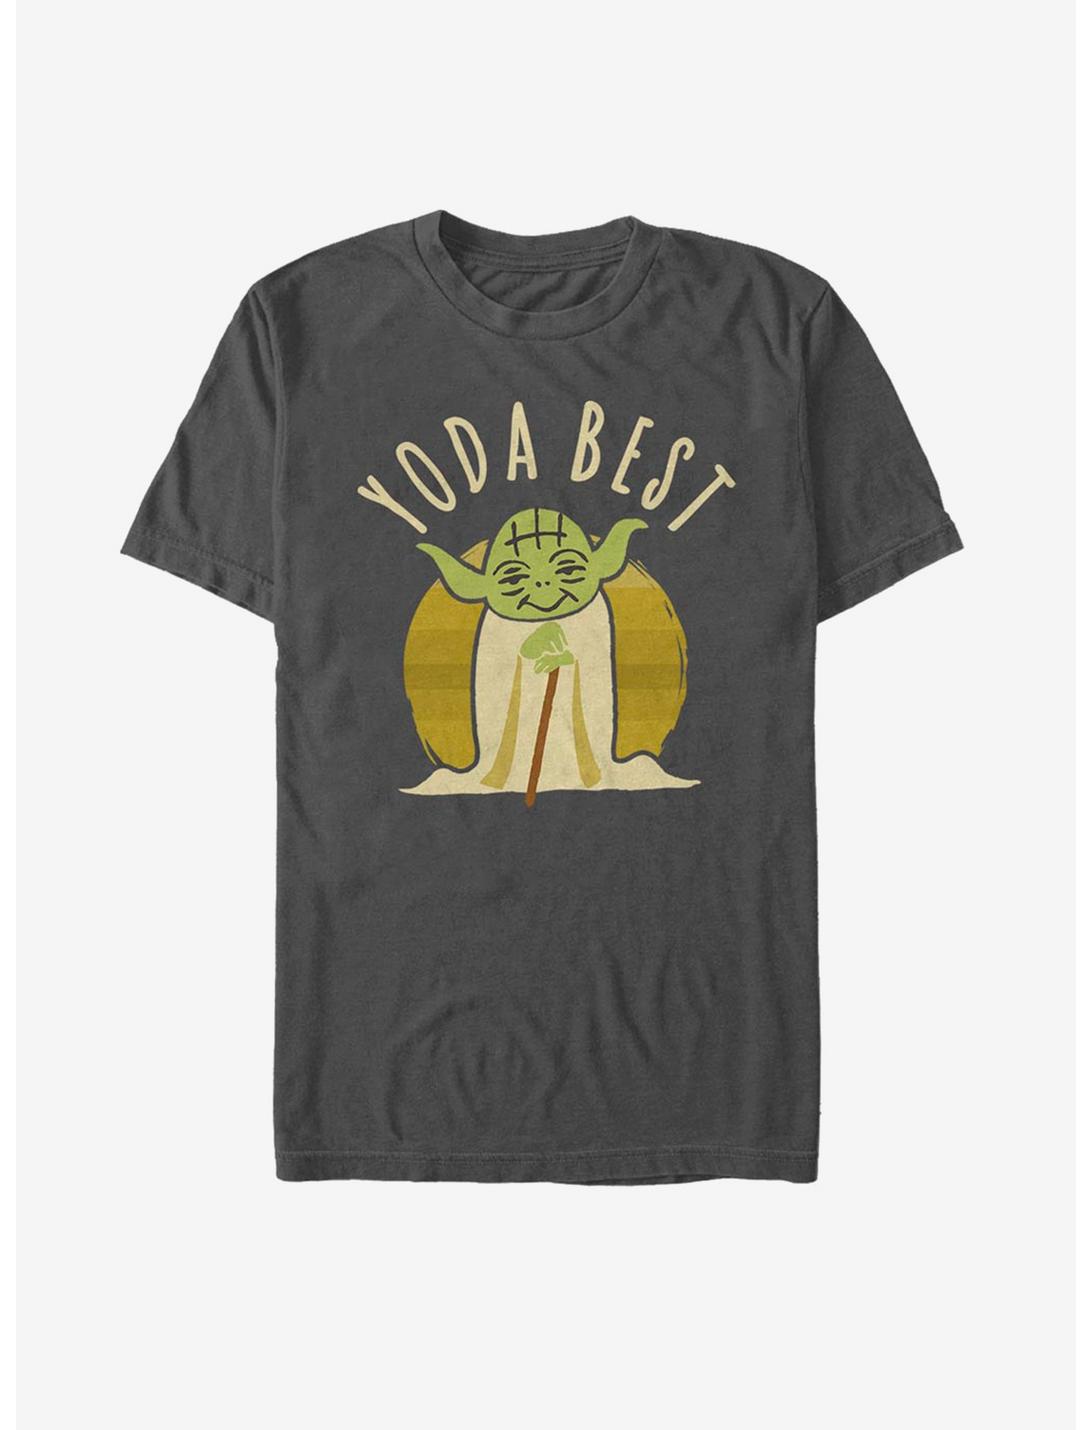 Star Wars Best Yoda Says T-Shirt, CHARCOAL, hi-res